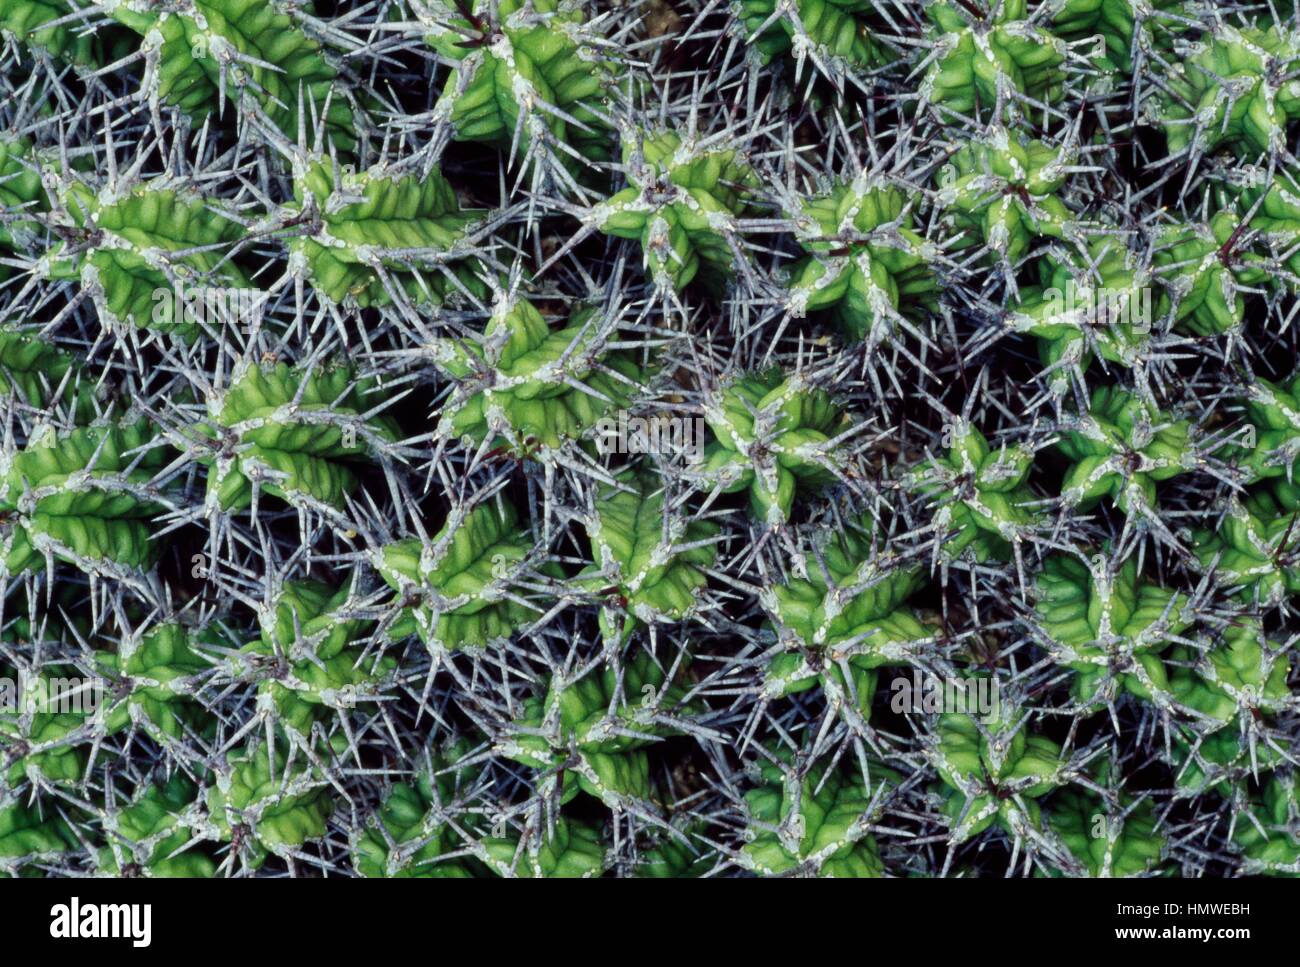 Dwarf pincushion euphorbia (Euphorbia mitriformis), Cactaceae. Detail of rosettes and spines. Stock Photo